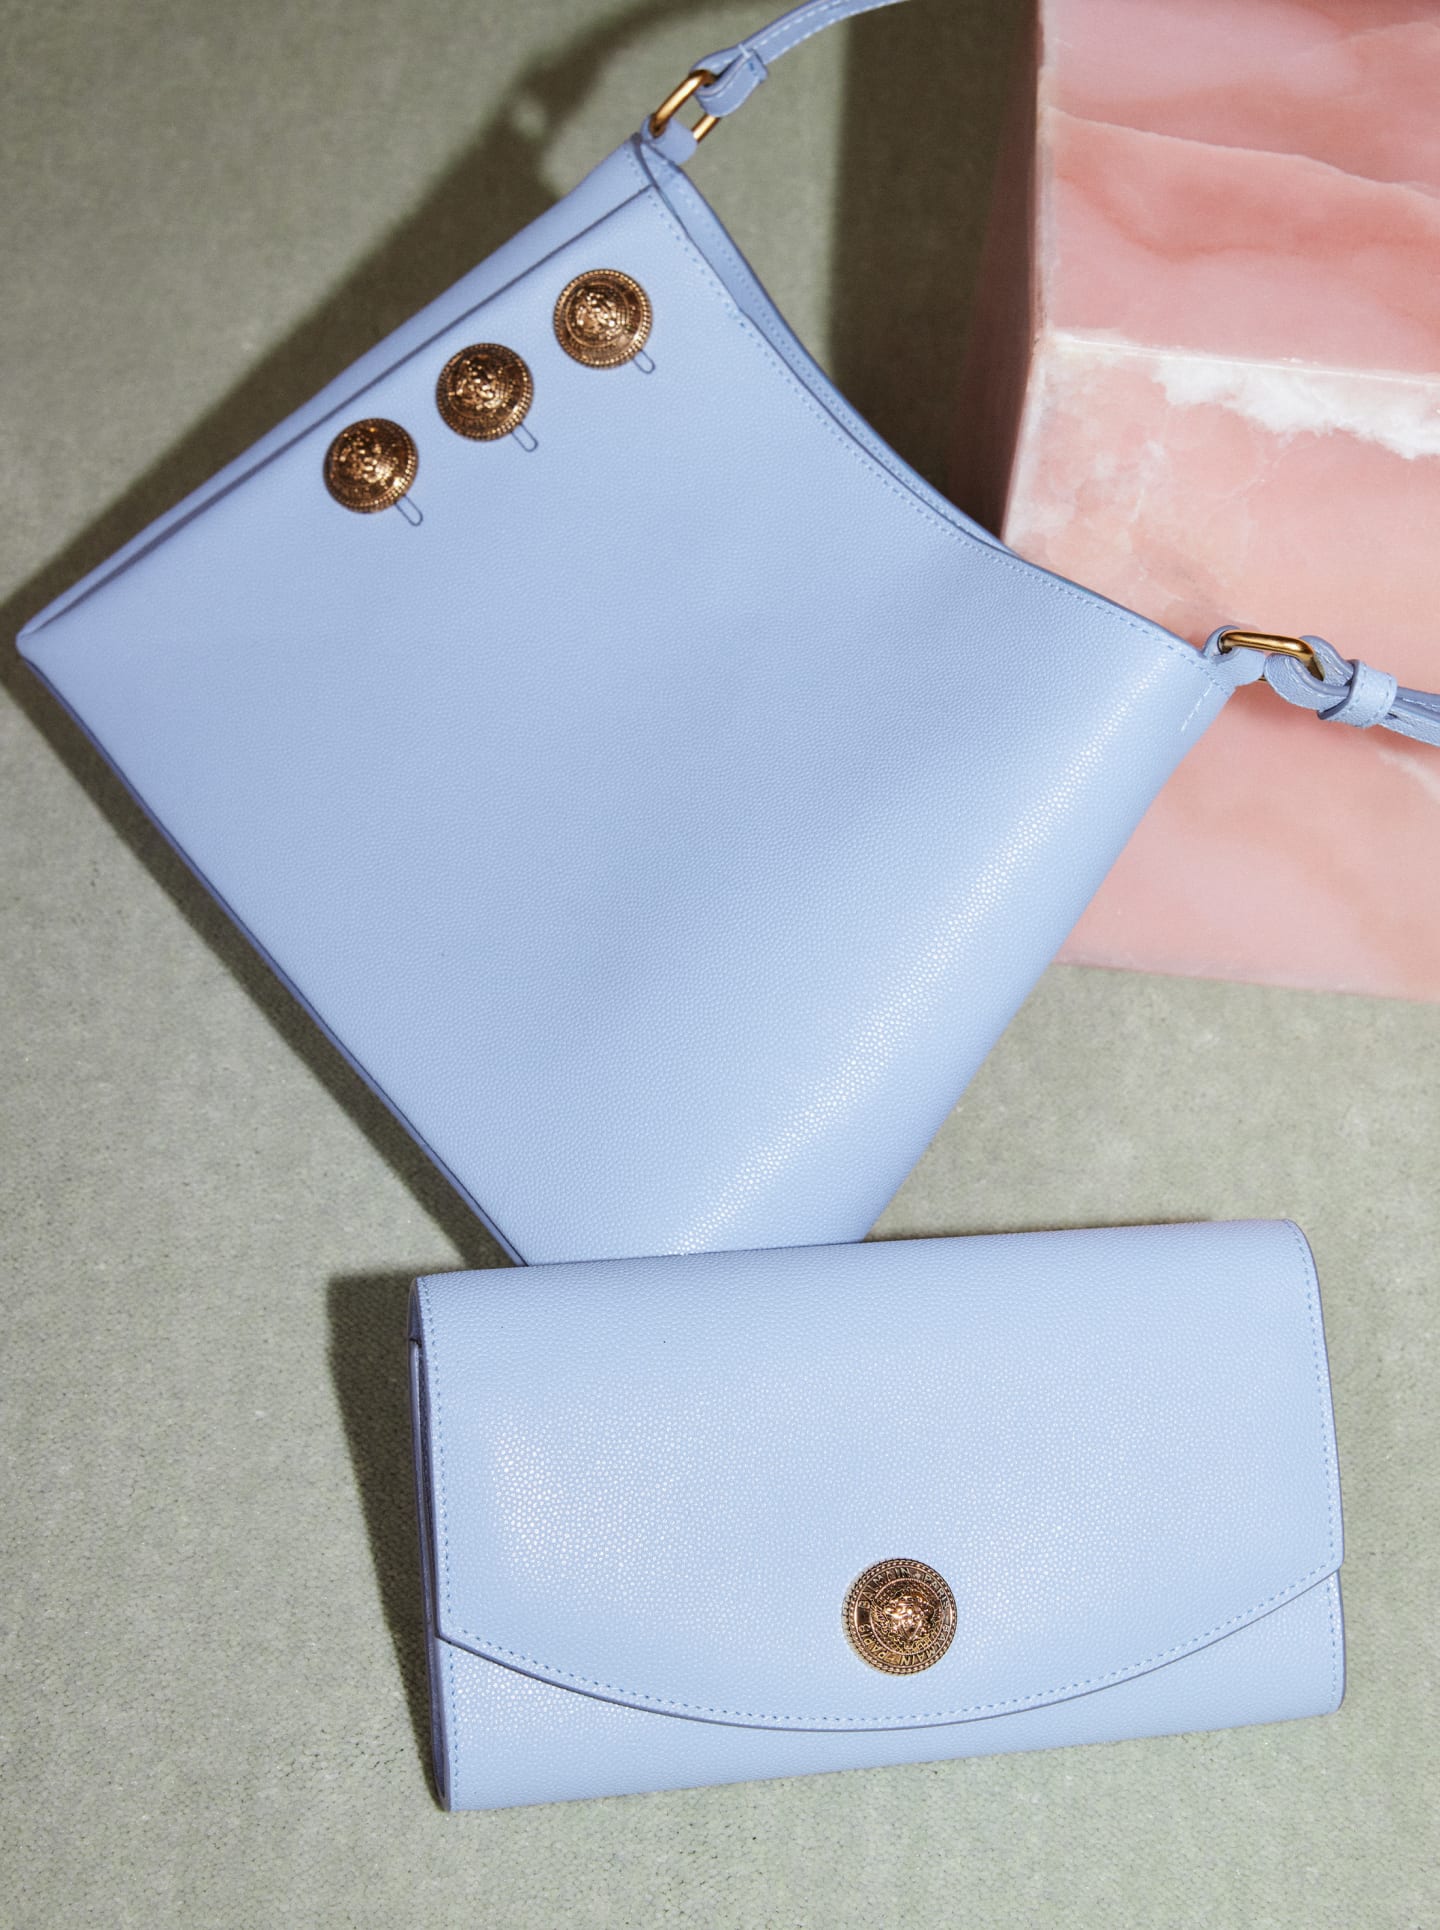 navy blue leather hobo handbag — MUSEUM OUTLETS